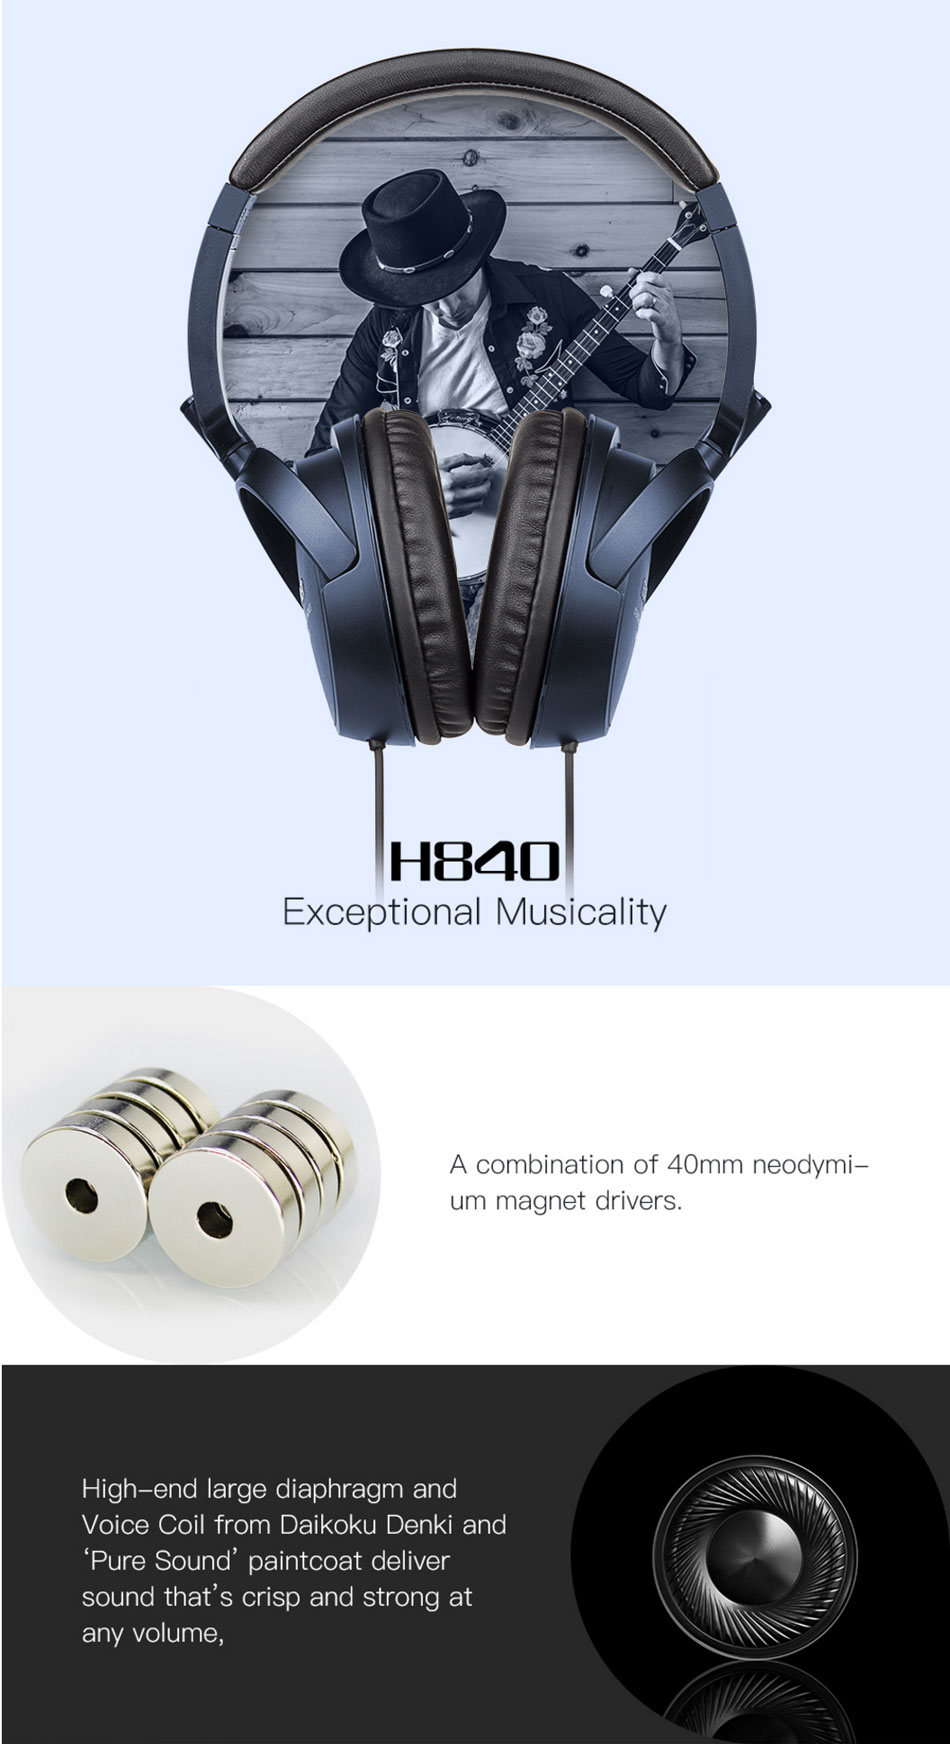 Edifier H840 Noise Cancelling Powerful Sound Ergonomic Ear Pads HIFI Headphone Headset 3.5mm AUX 7